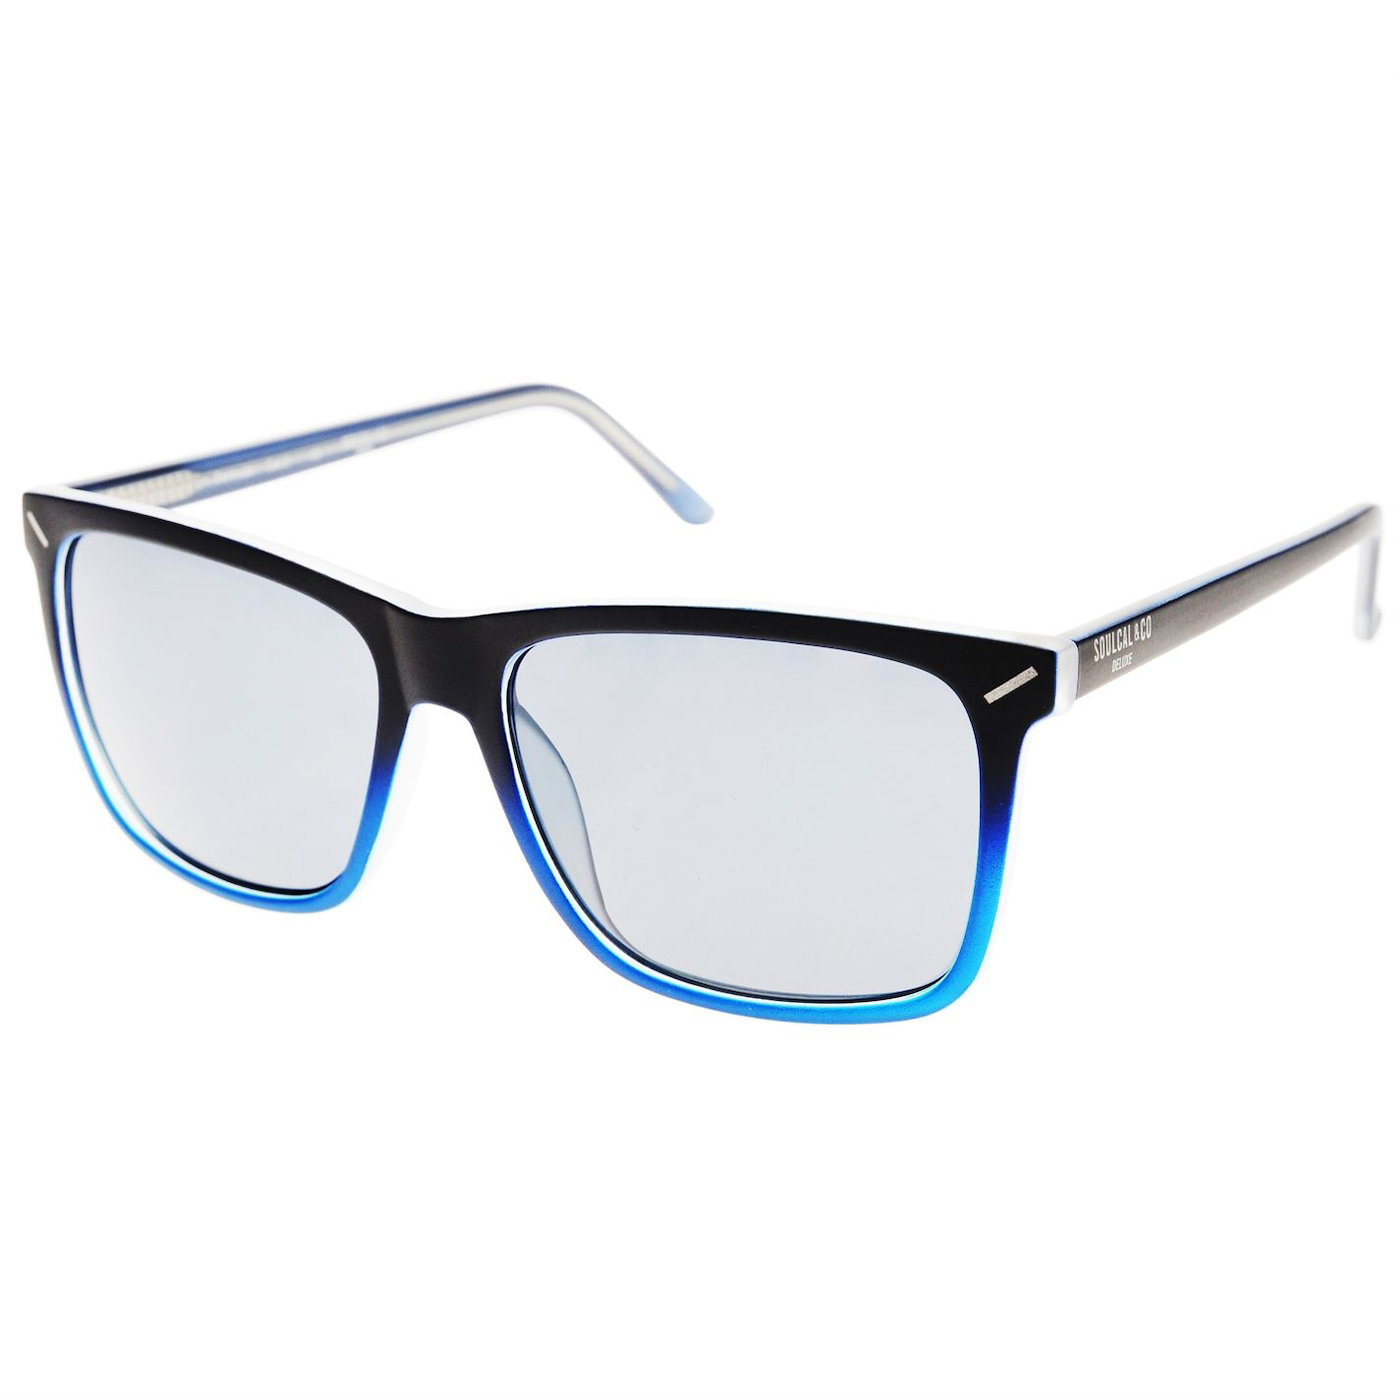 SoulCal Bermuda Sunglasses